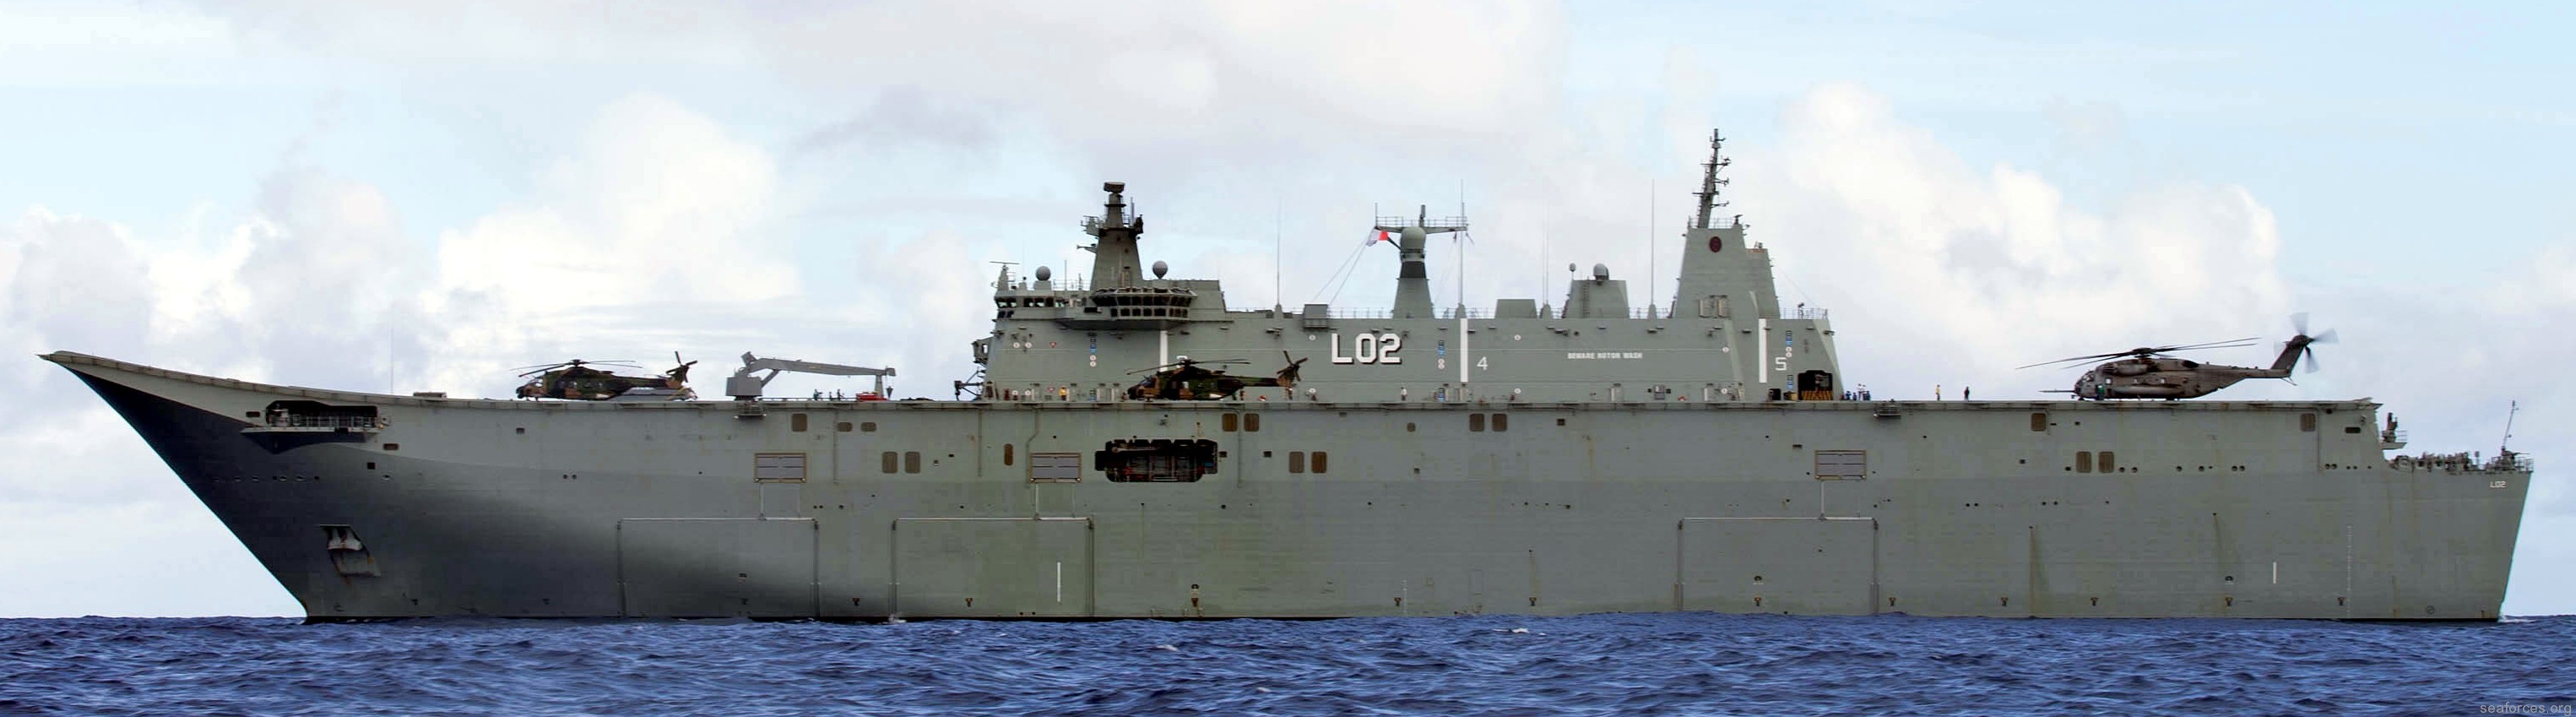 l-01 hmas canberra amphibious landing ship helicopter dock lhd royal australian navy 2016 09